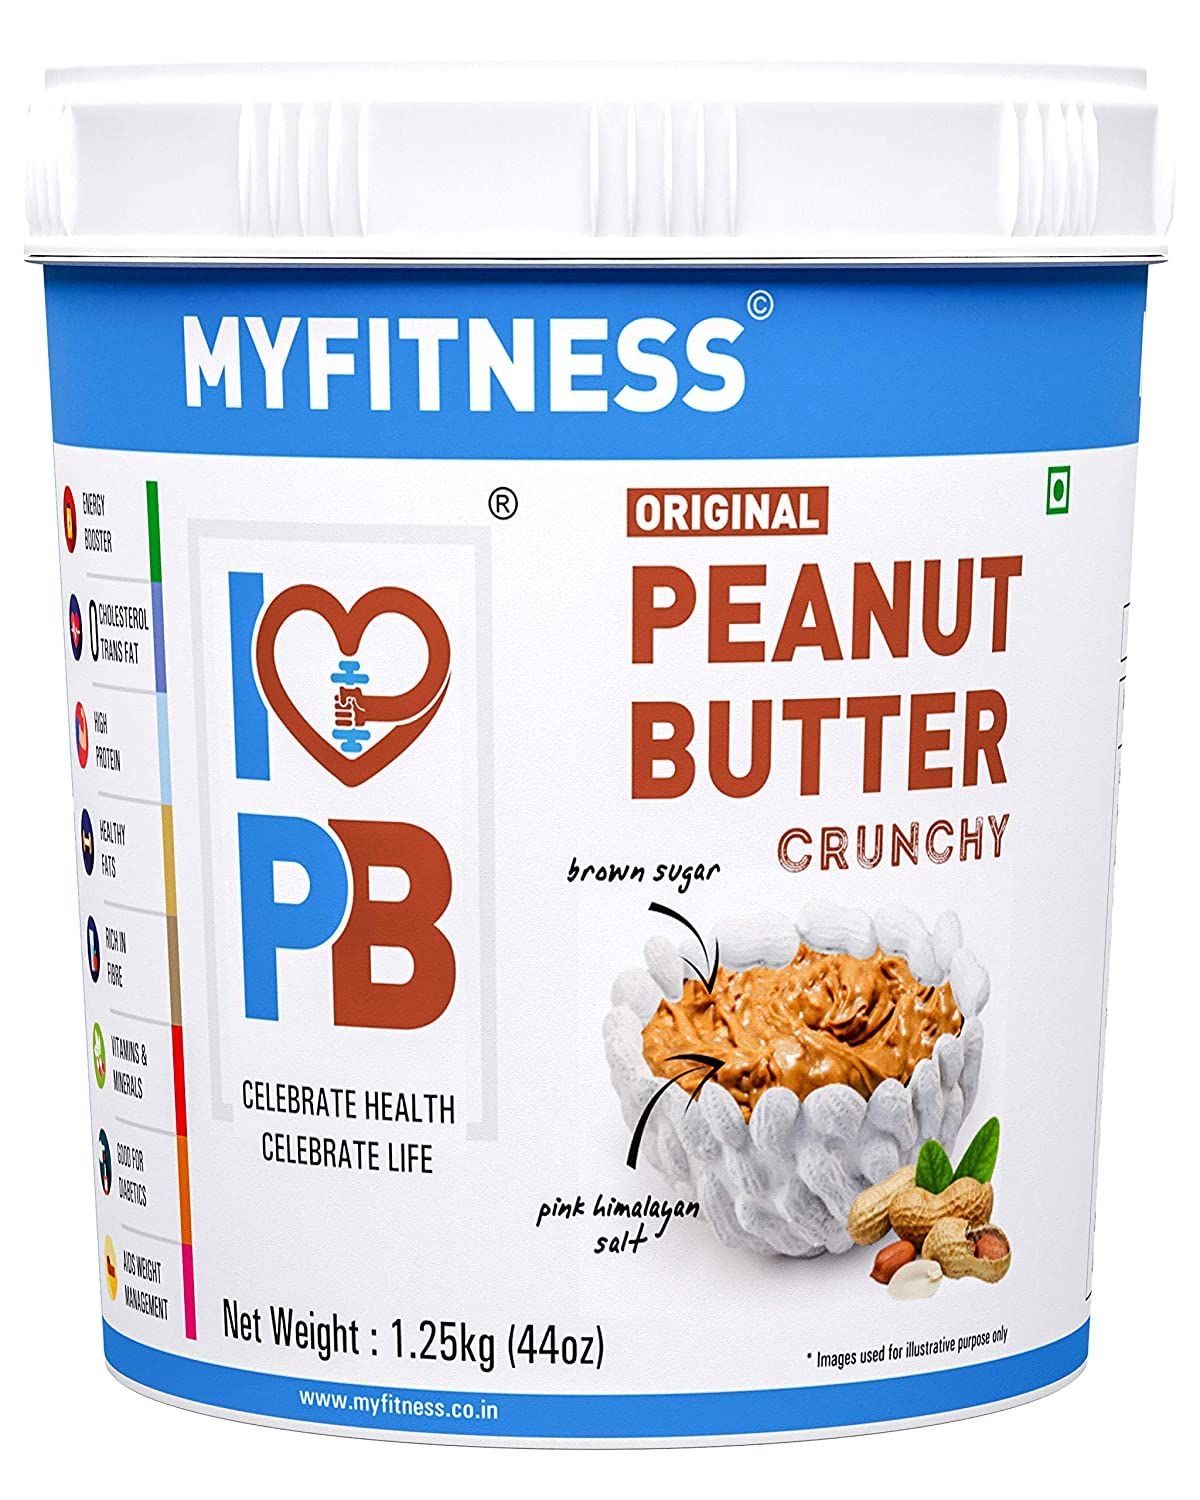 Myfitness Original Peanut Butter Crunchy Image